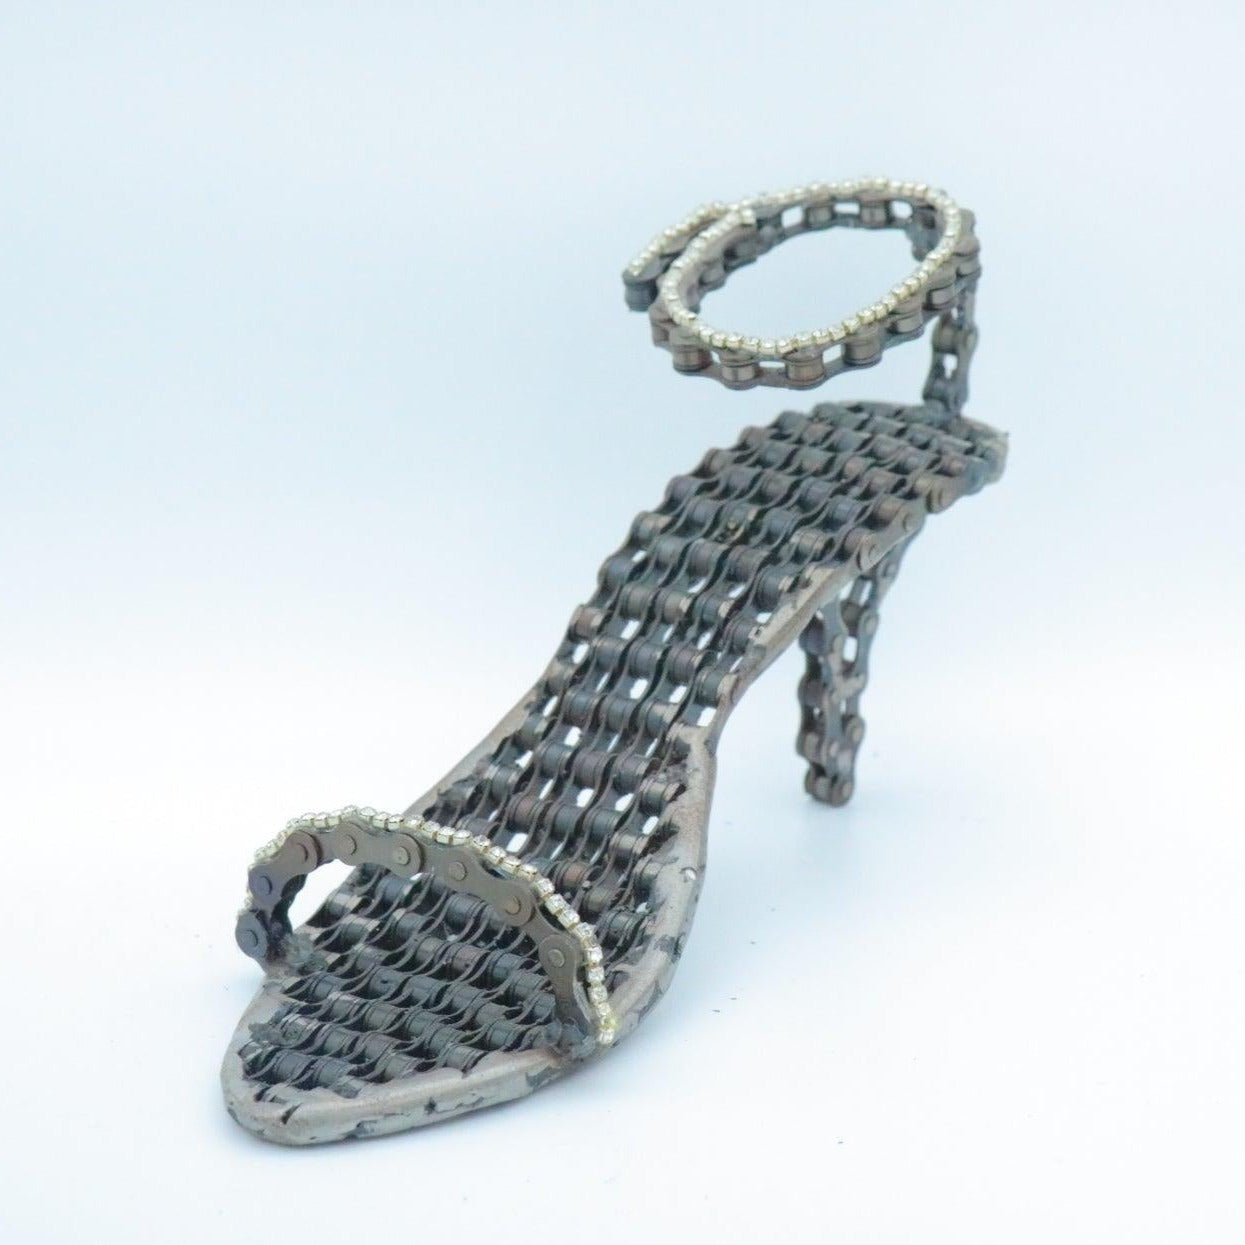 Cinderella Shoe Sculpture | UNCHAINED by NIRIT LEVAV PACKER